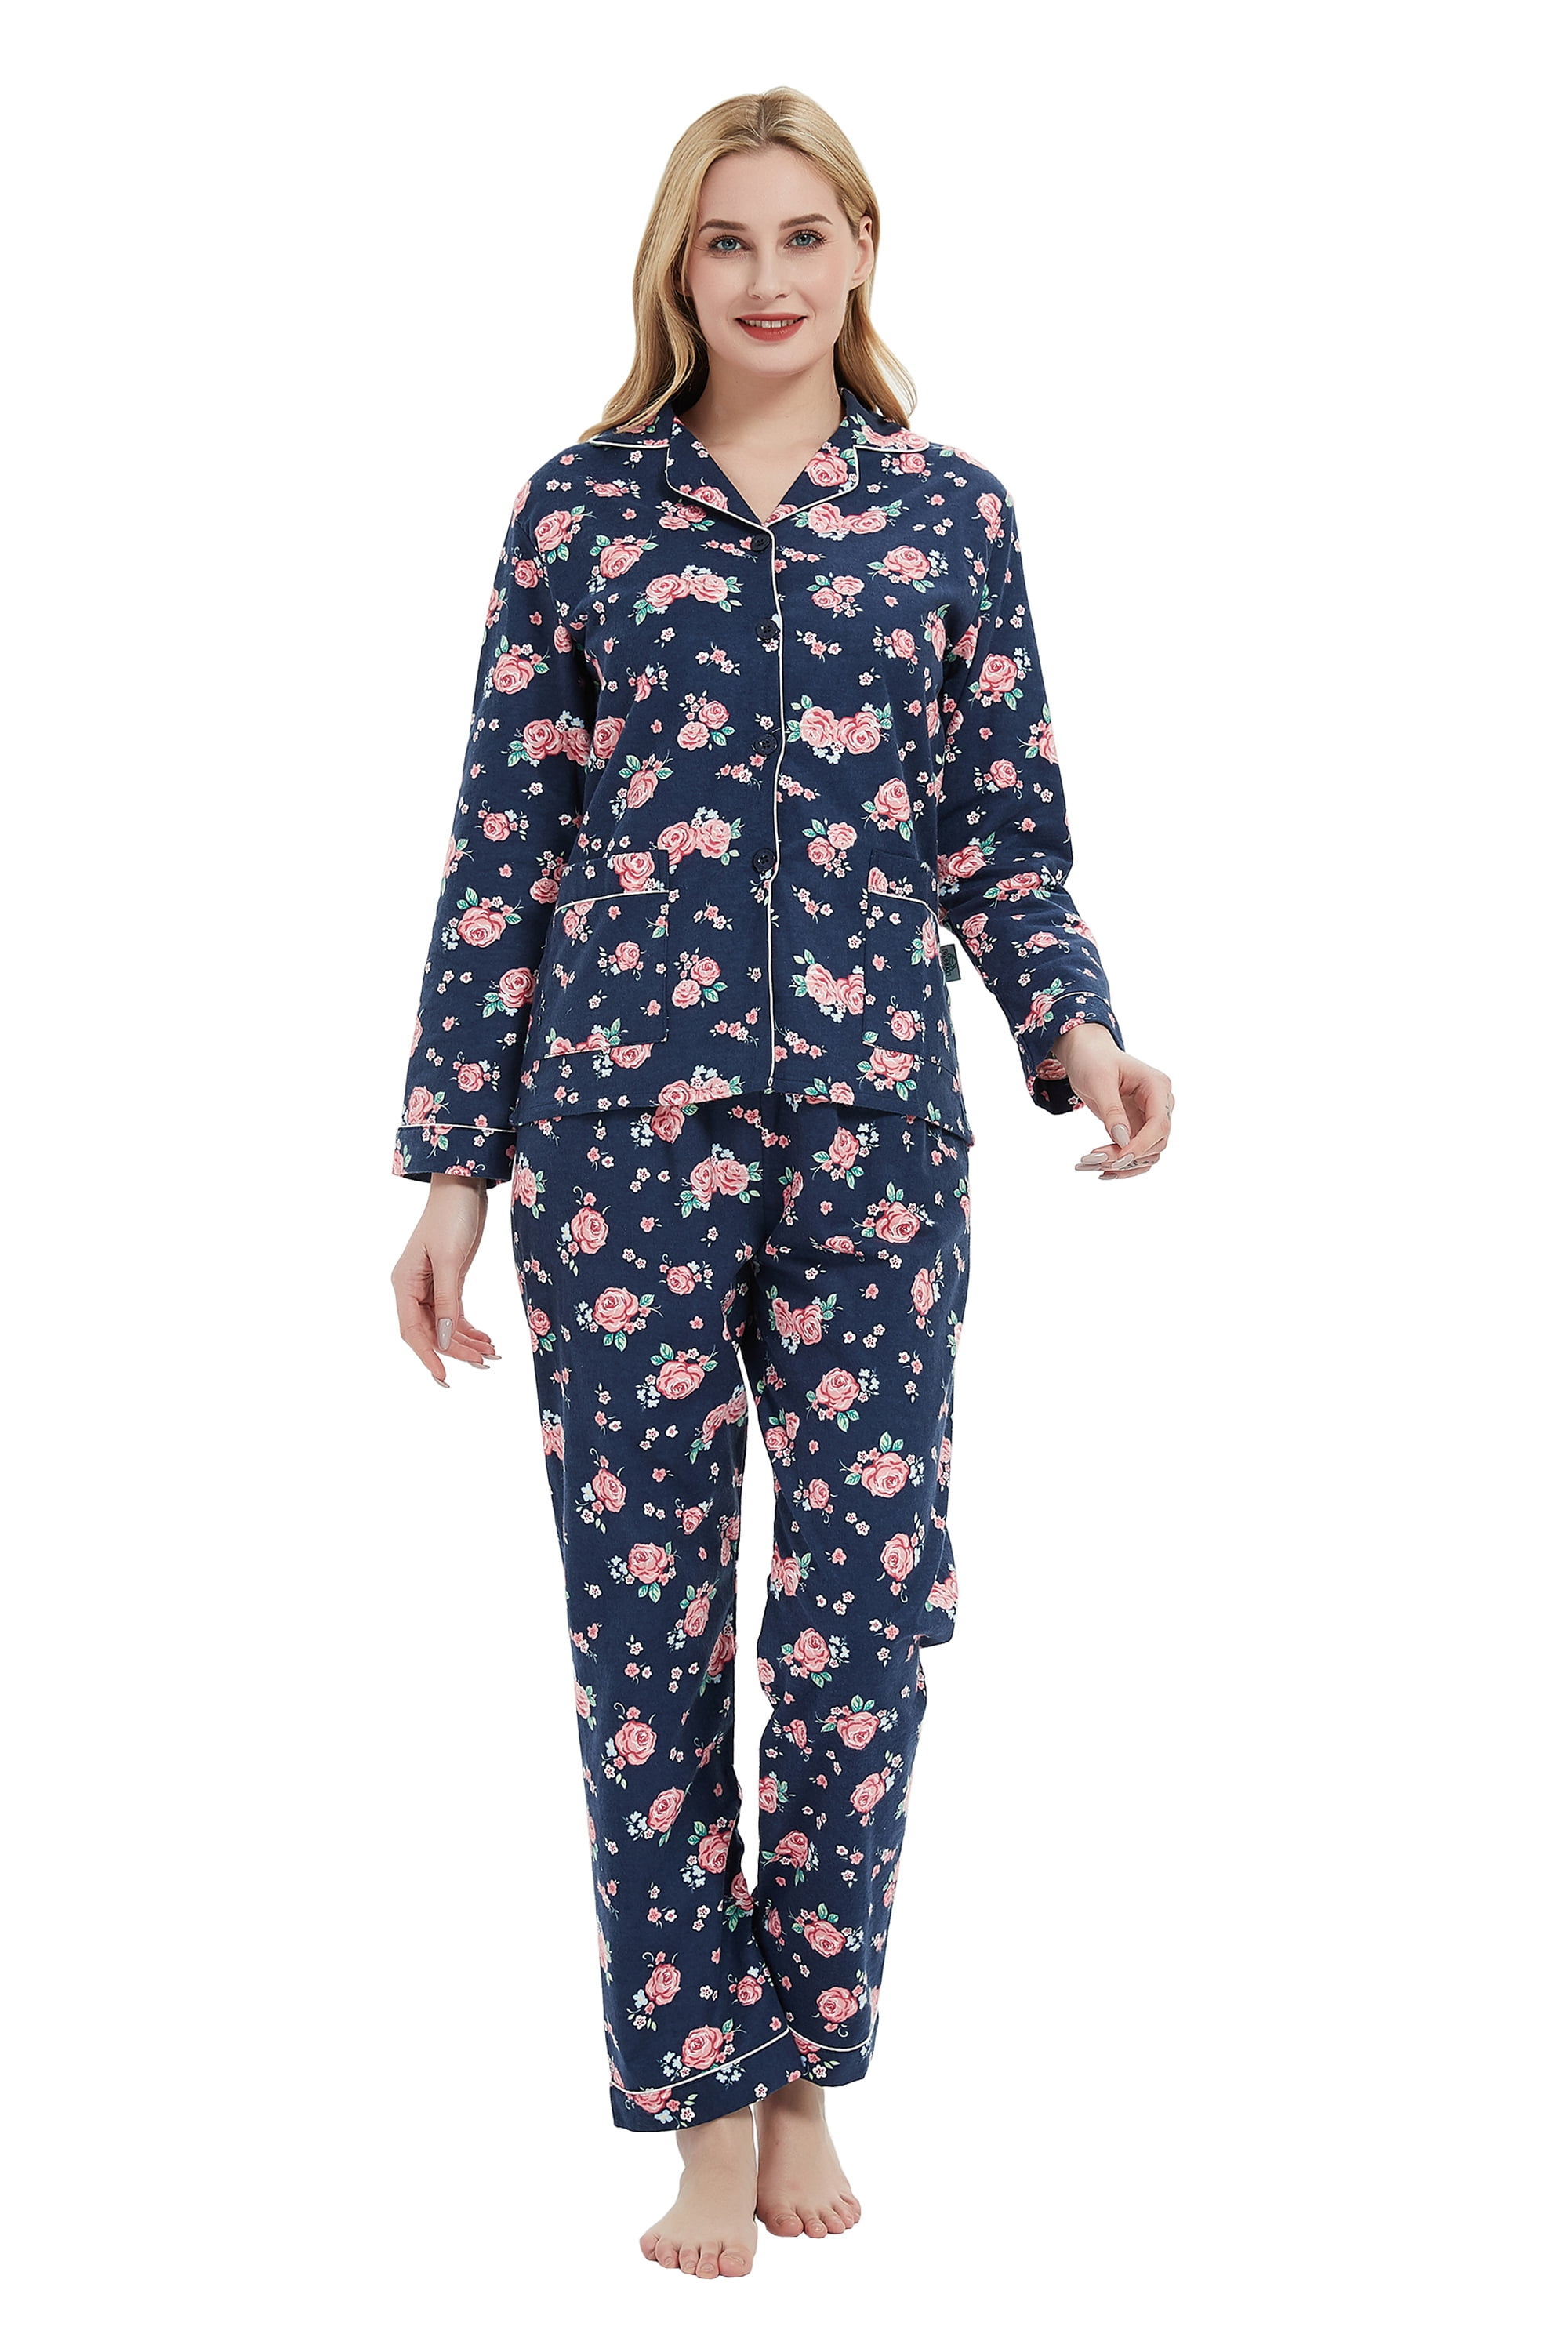 Lisingtool Pajamas for Women Set Women's 2 Piece Thickened Warm Flannel  Long Pyjama Set Autumn Winter Sleepwear Plaid Sleepwear Pajama Pants A